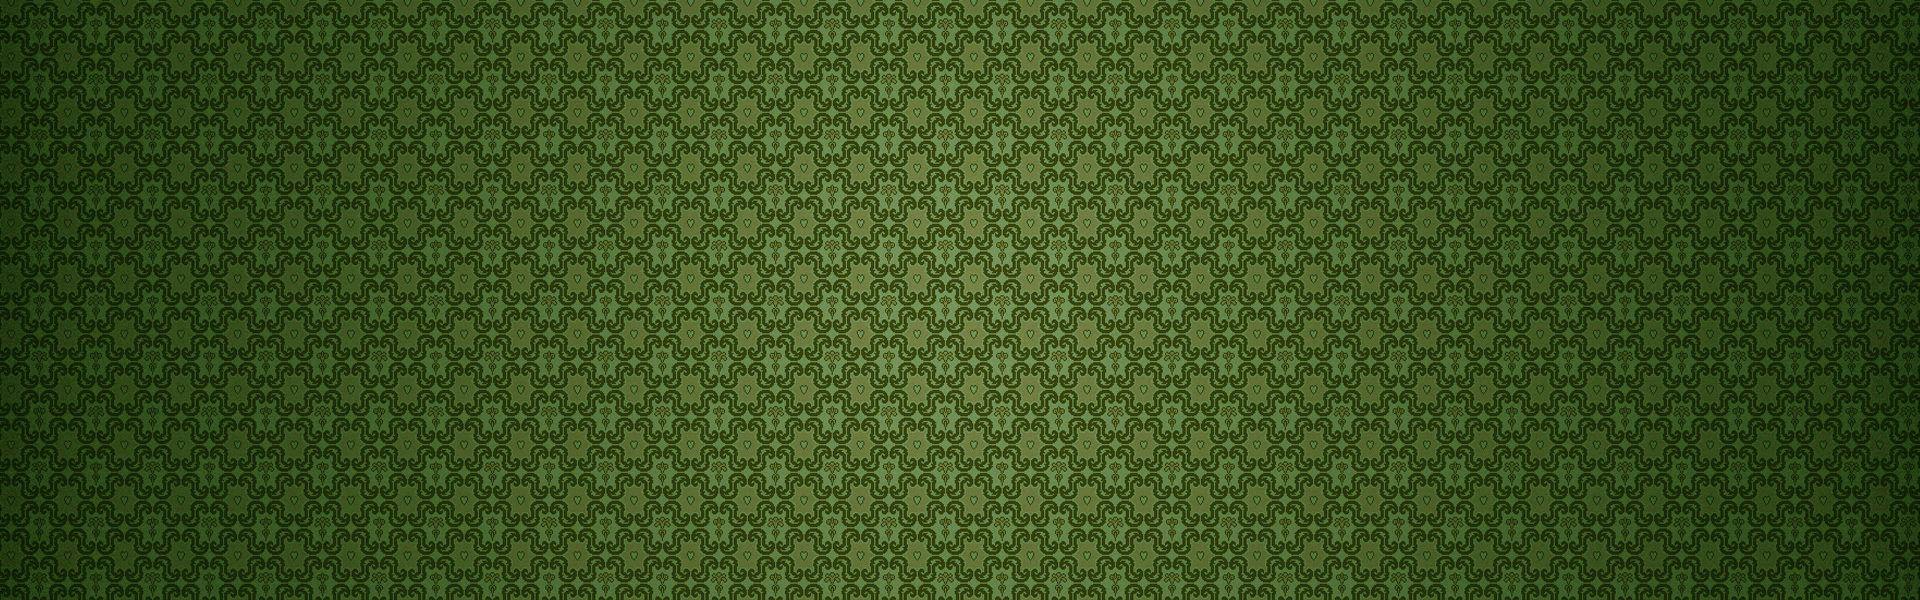 Fabric Pattern Wallpaper Hd Free 261403 20160201124229